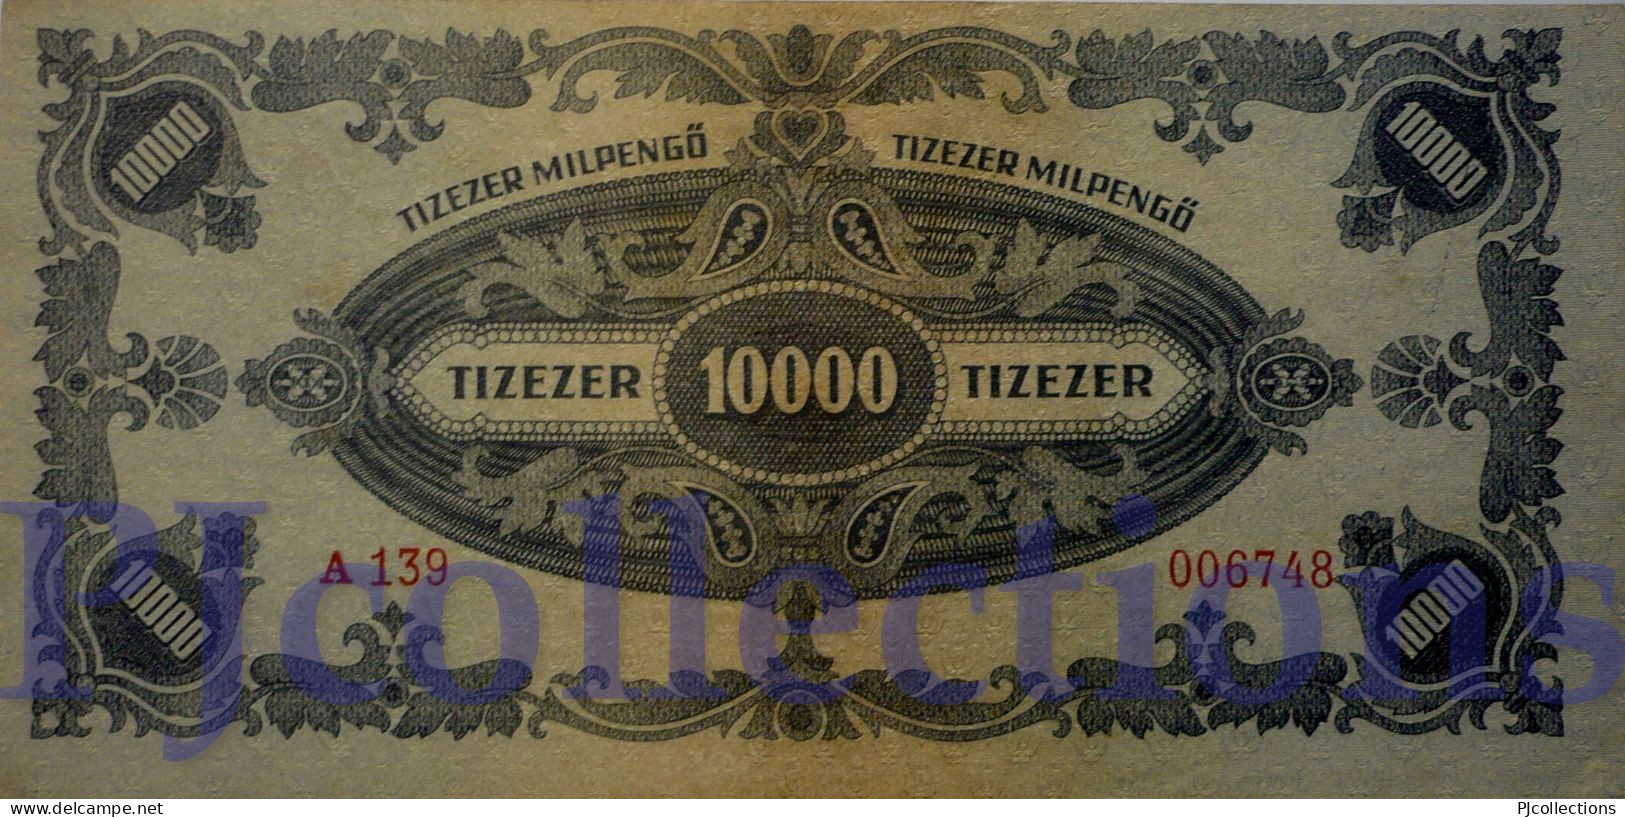 HUNGARY 10000 MILPENGO 1946 PICK 126 AU/UNC LOW SERIAL NUMBER "006748" - Ungarn